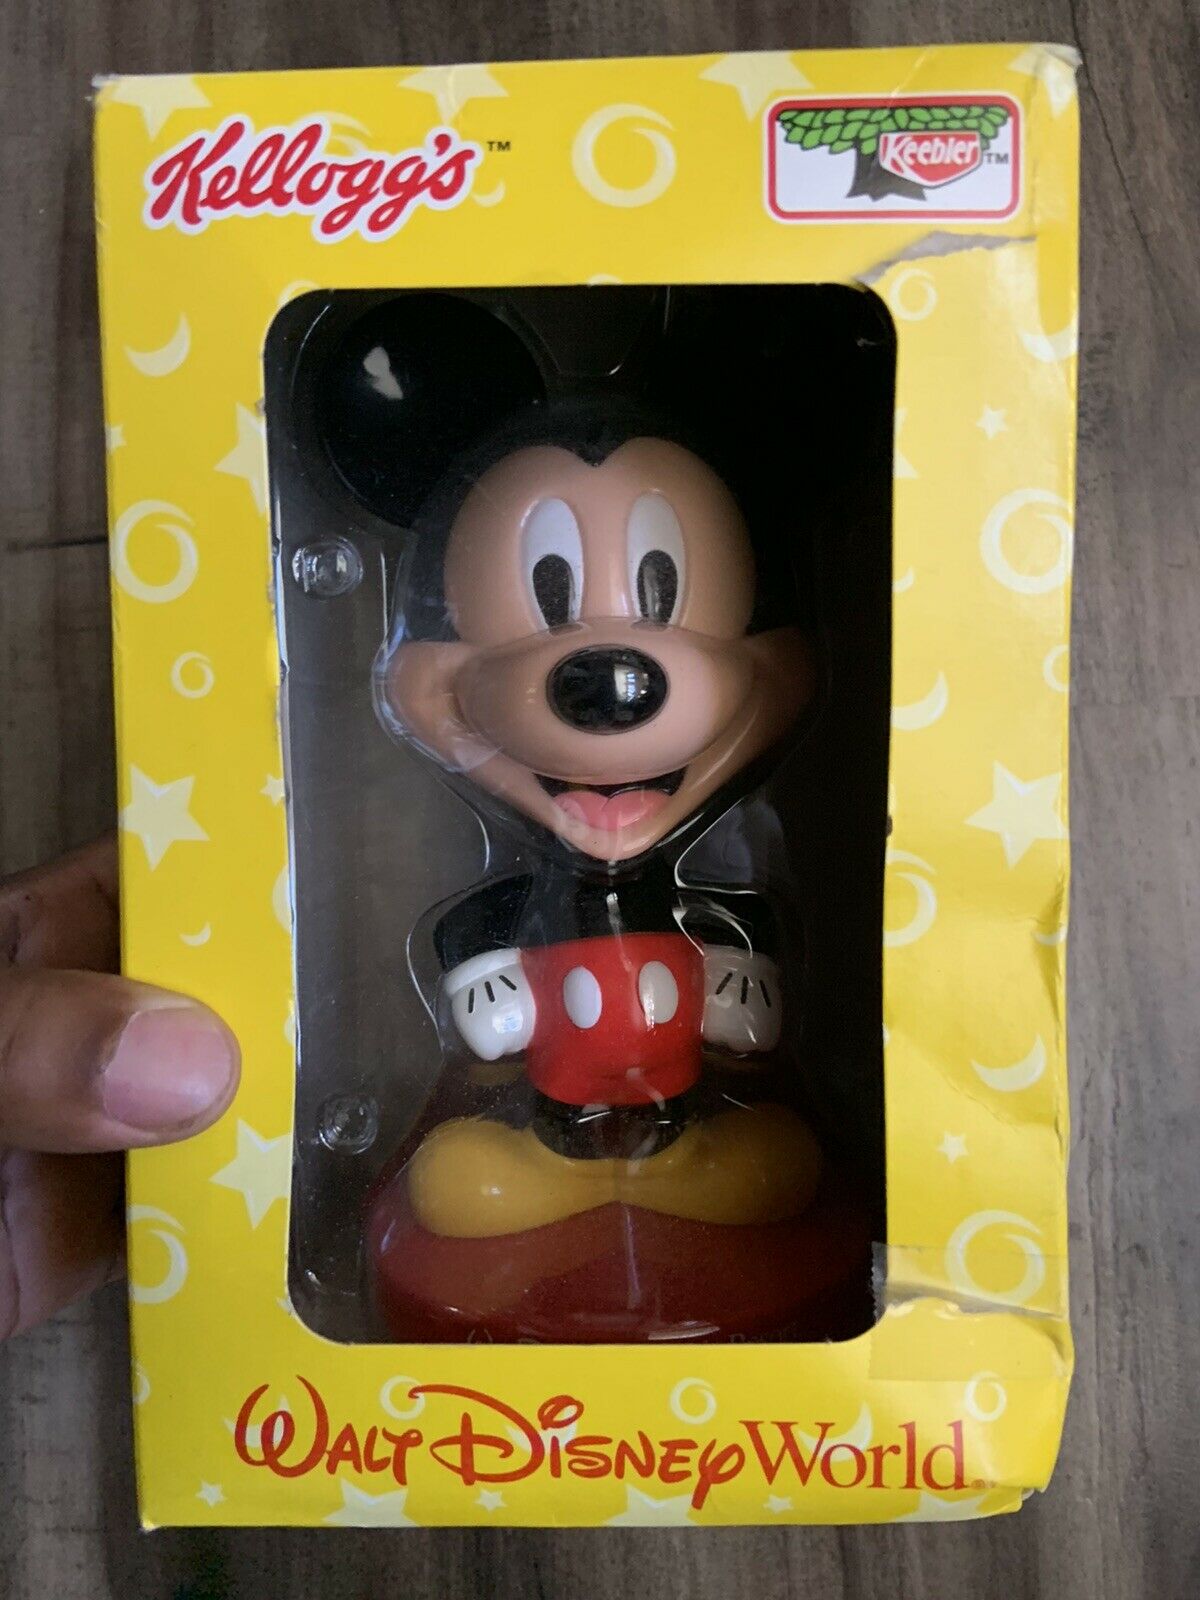 Mickey Mouse Bobble Head Doll Walt Disney World Kellogg's 2002 Plastic 8